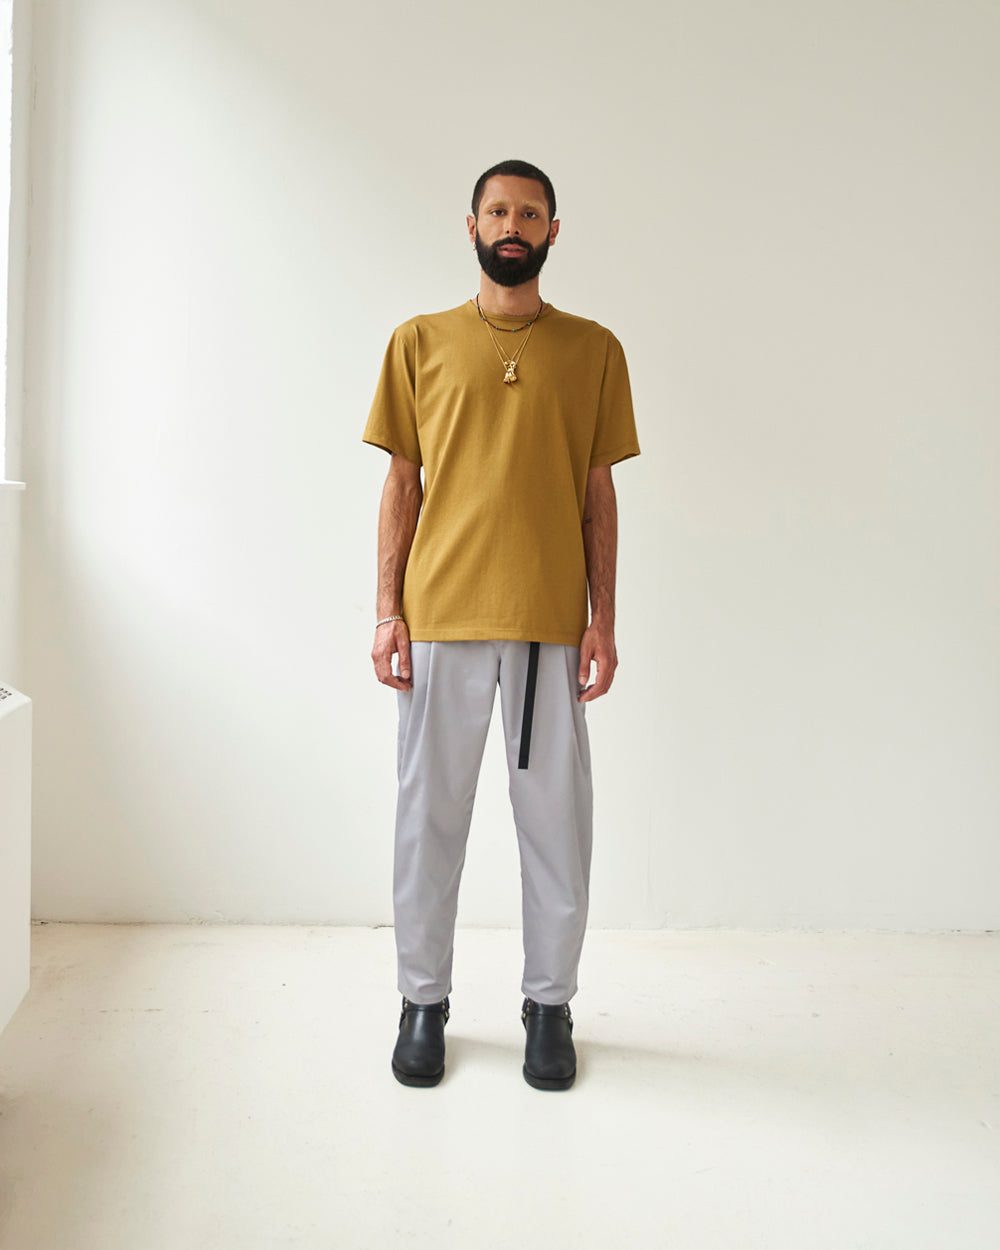 t-shirt olive unisex genderless elio veri montreal clothing